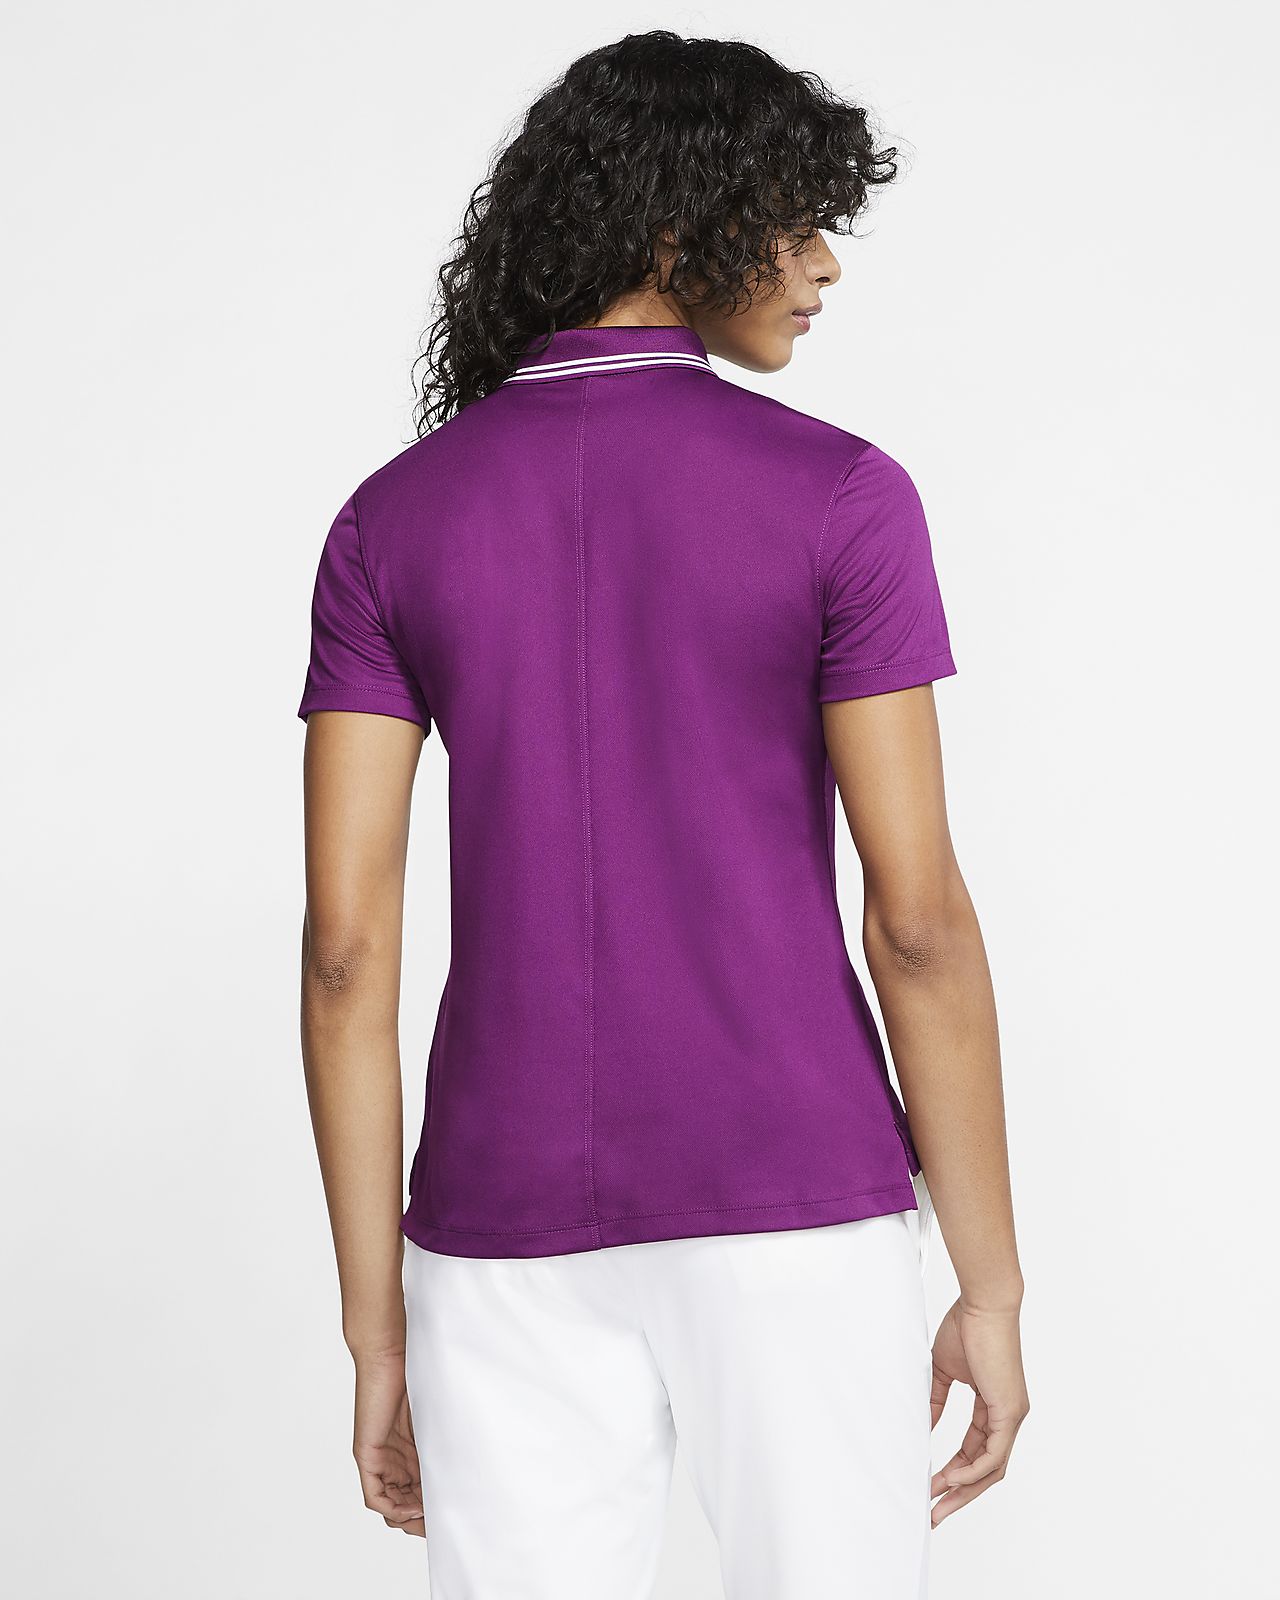 nike purple golf shirt